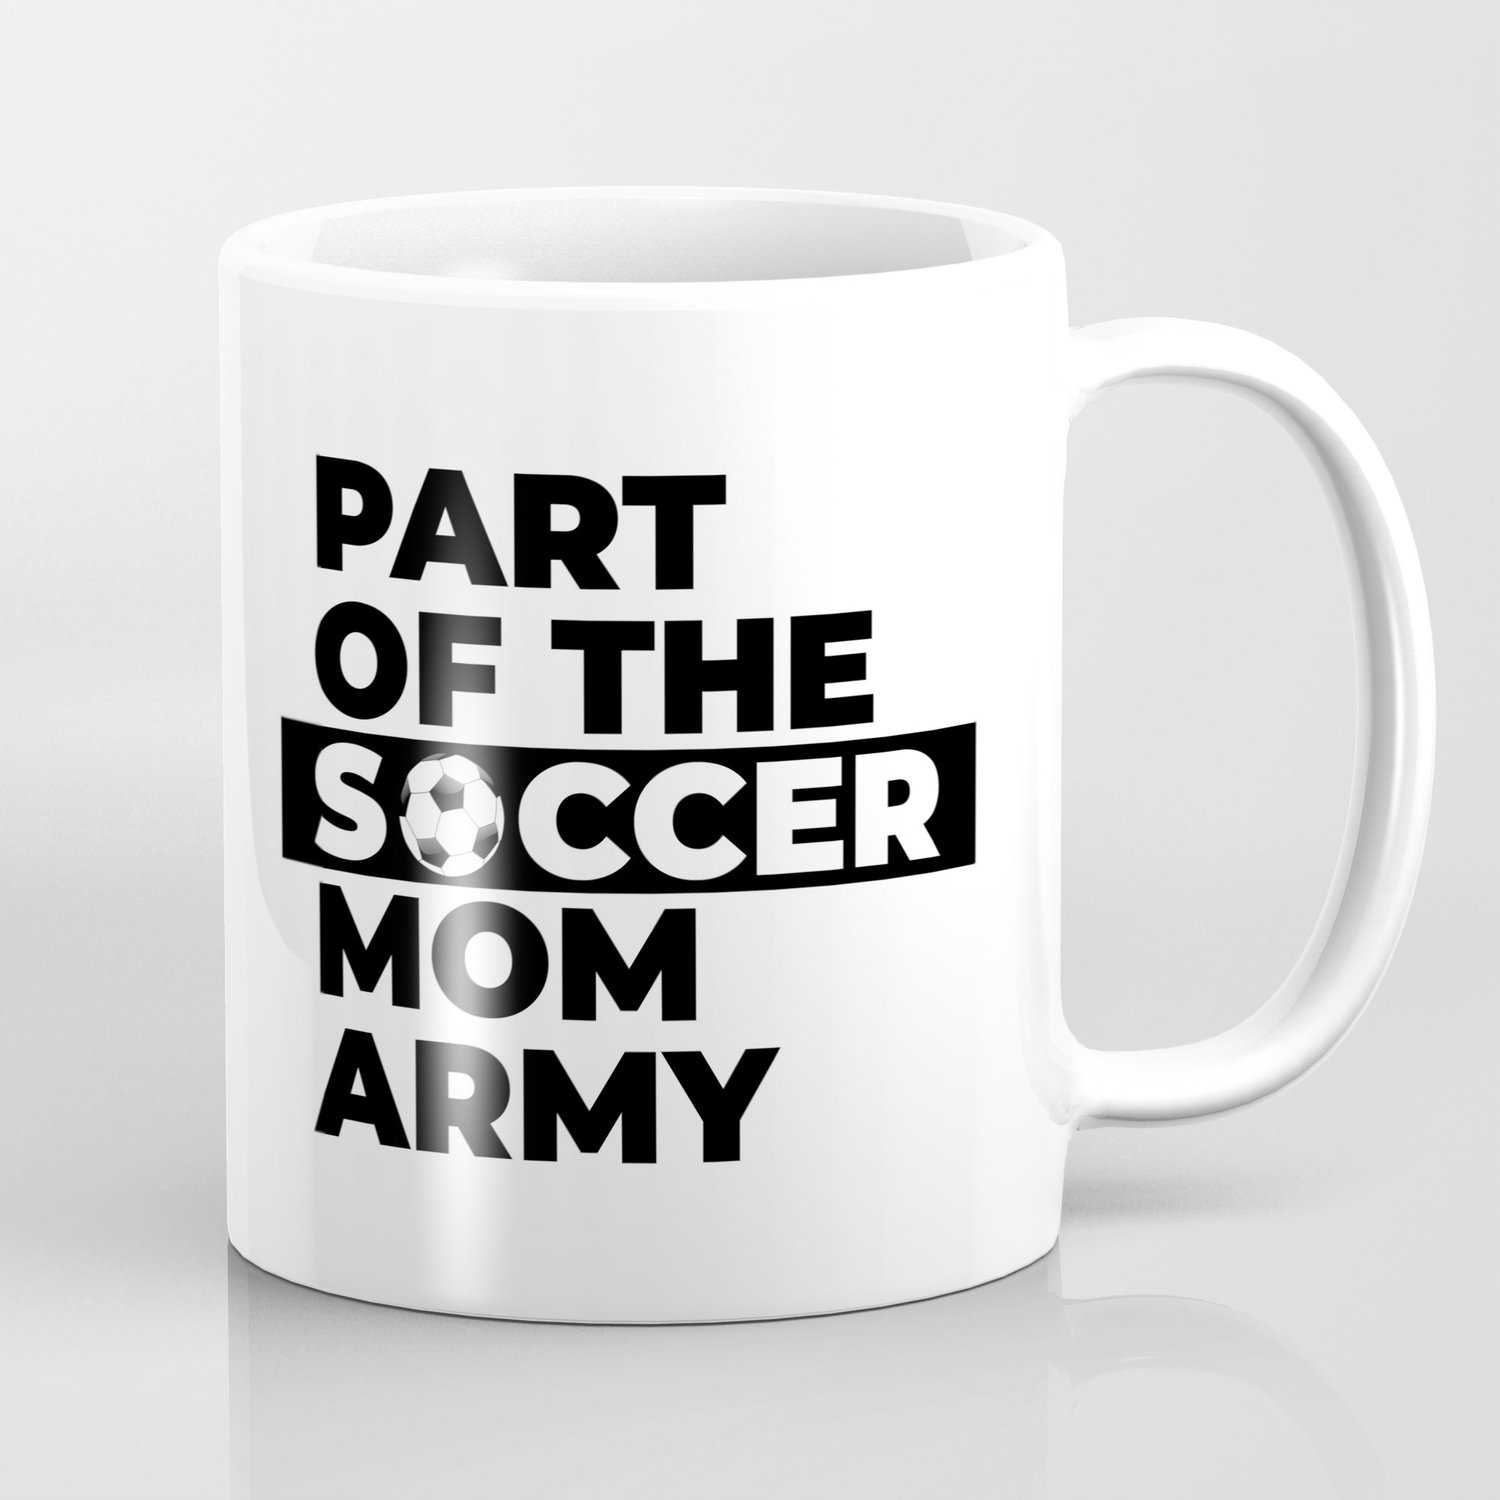 Funny Part of the soccer mom army gift idea Coffee Mug by Lunaco | Society6